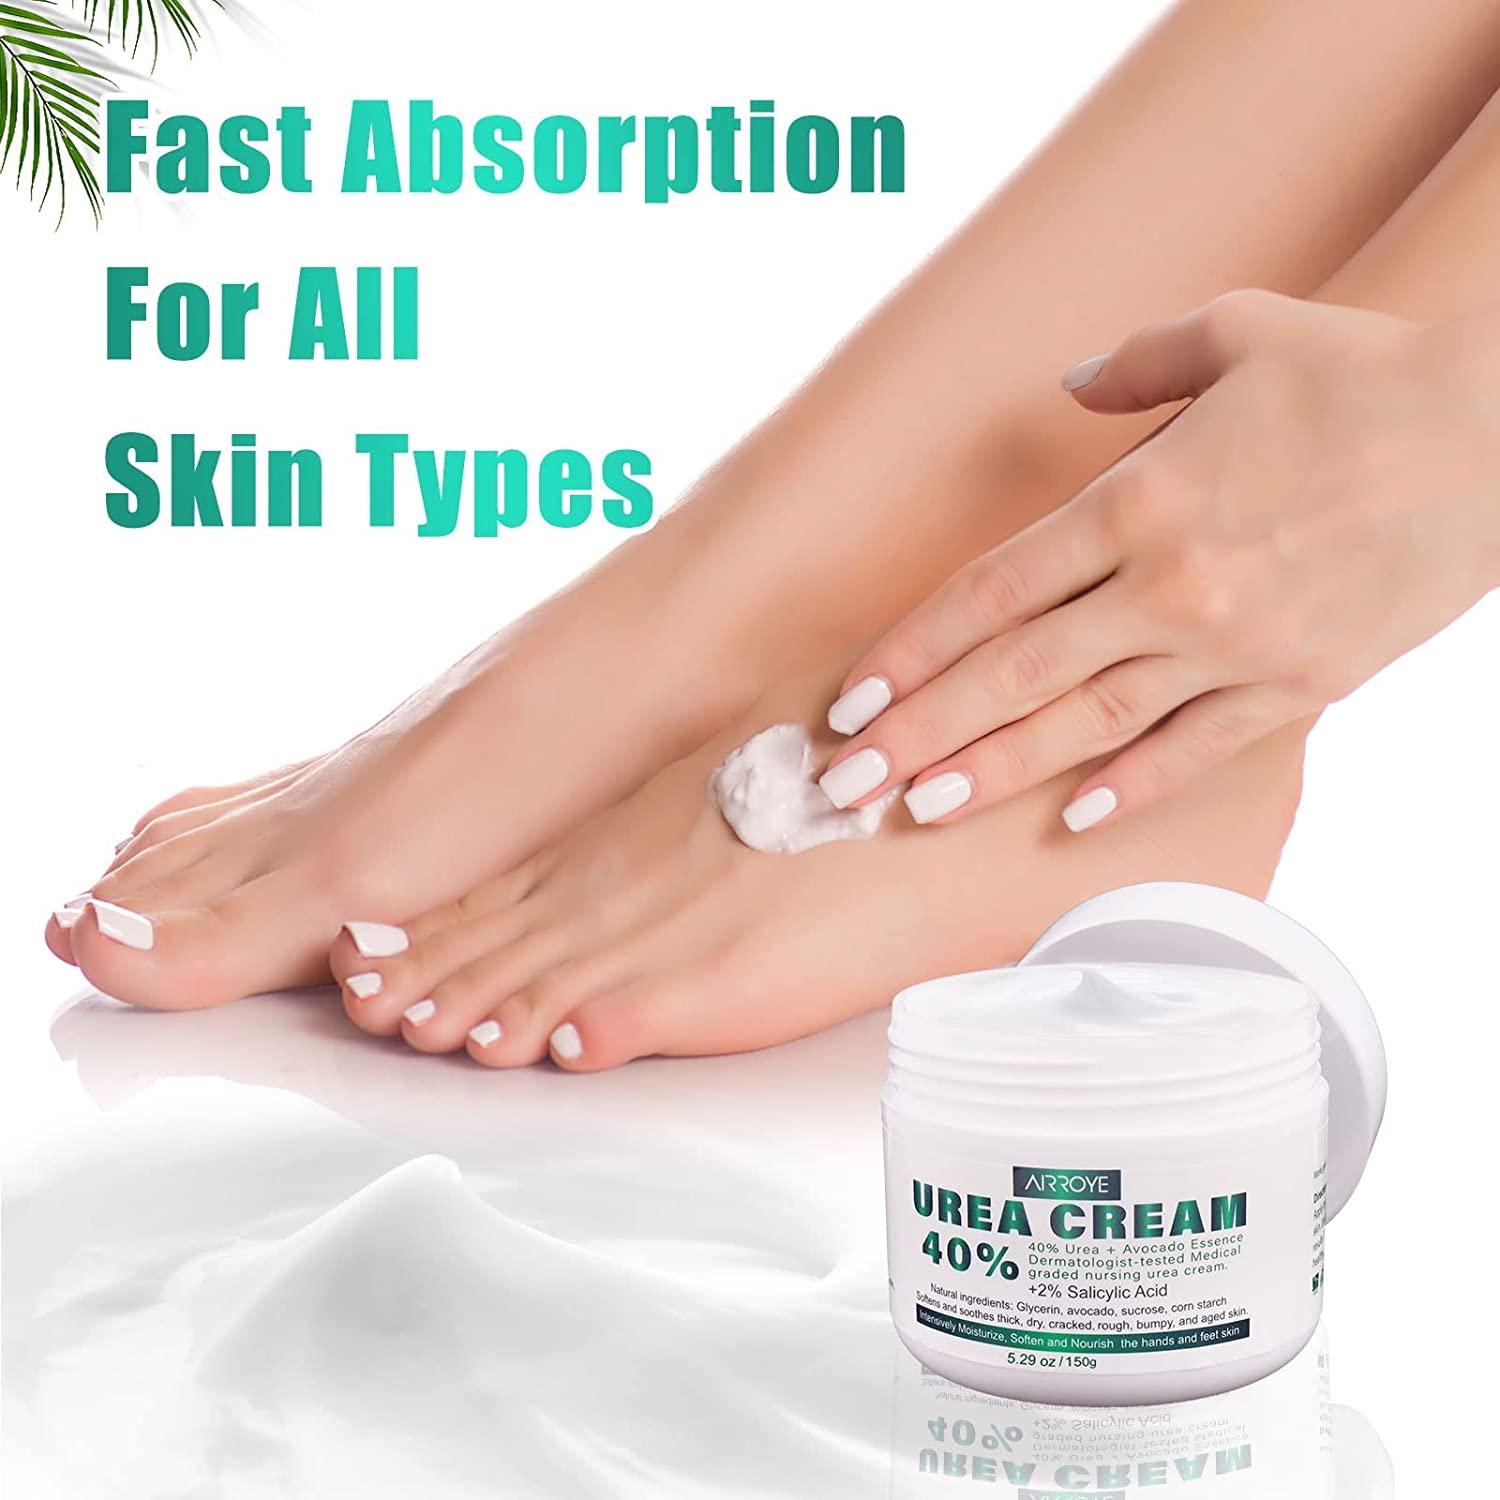 Urea 40 Foot Cream with 2 Plus Salicylic Acid Foot Cream for Dry